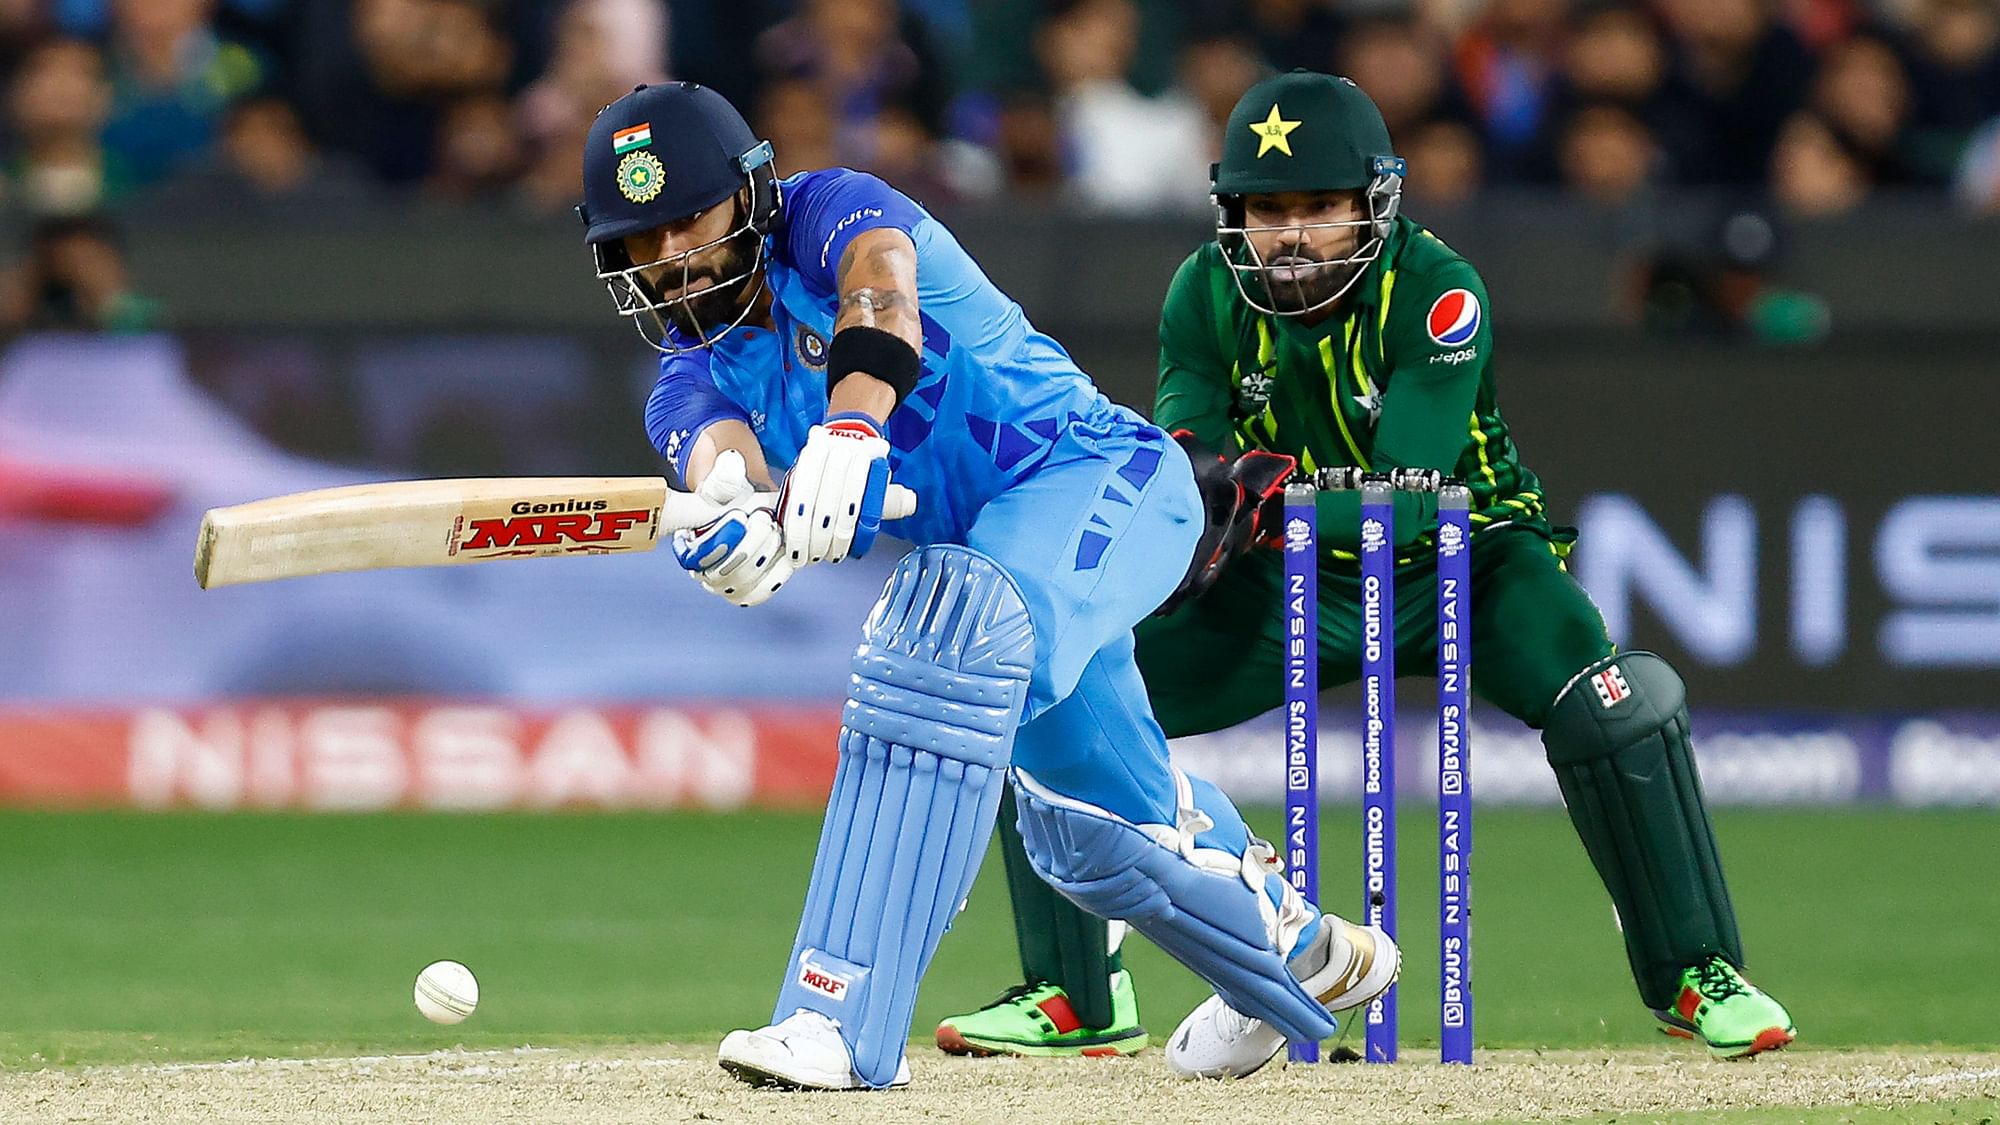 India vs Pakistan, T20 World Cup Sensational VIrat Kohli Steers India to 4-wicket Win